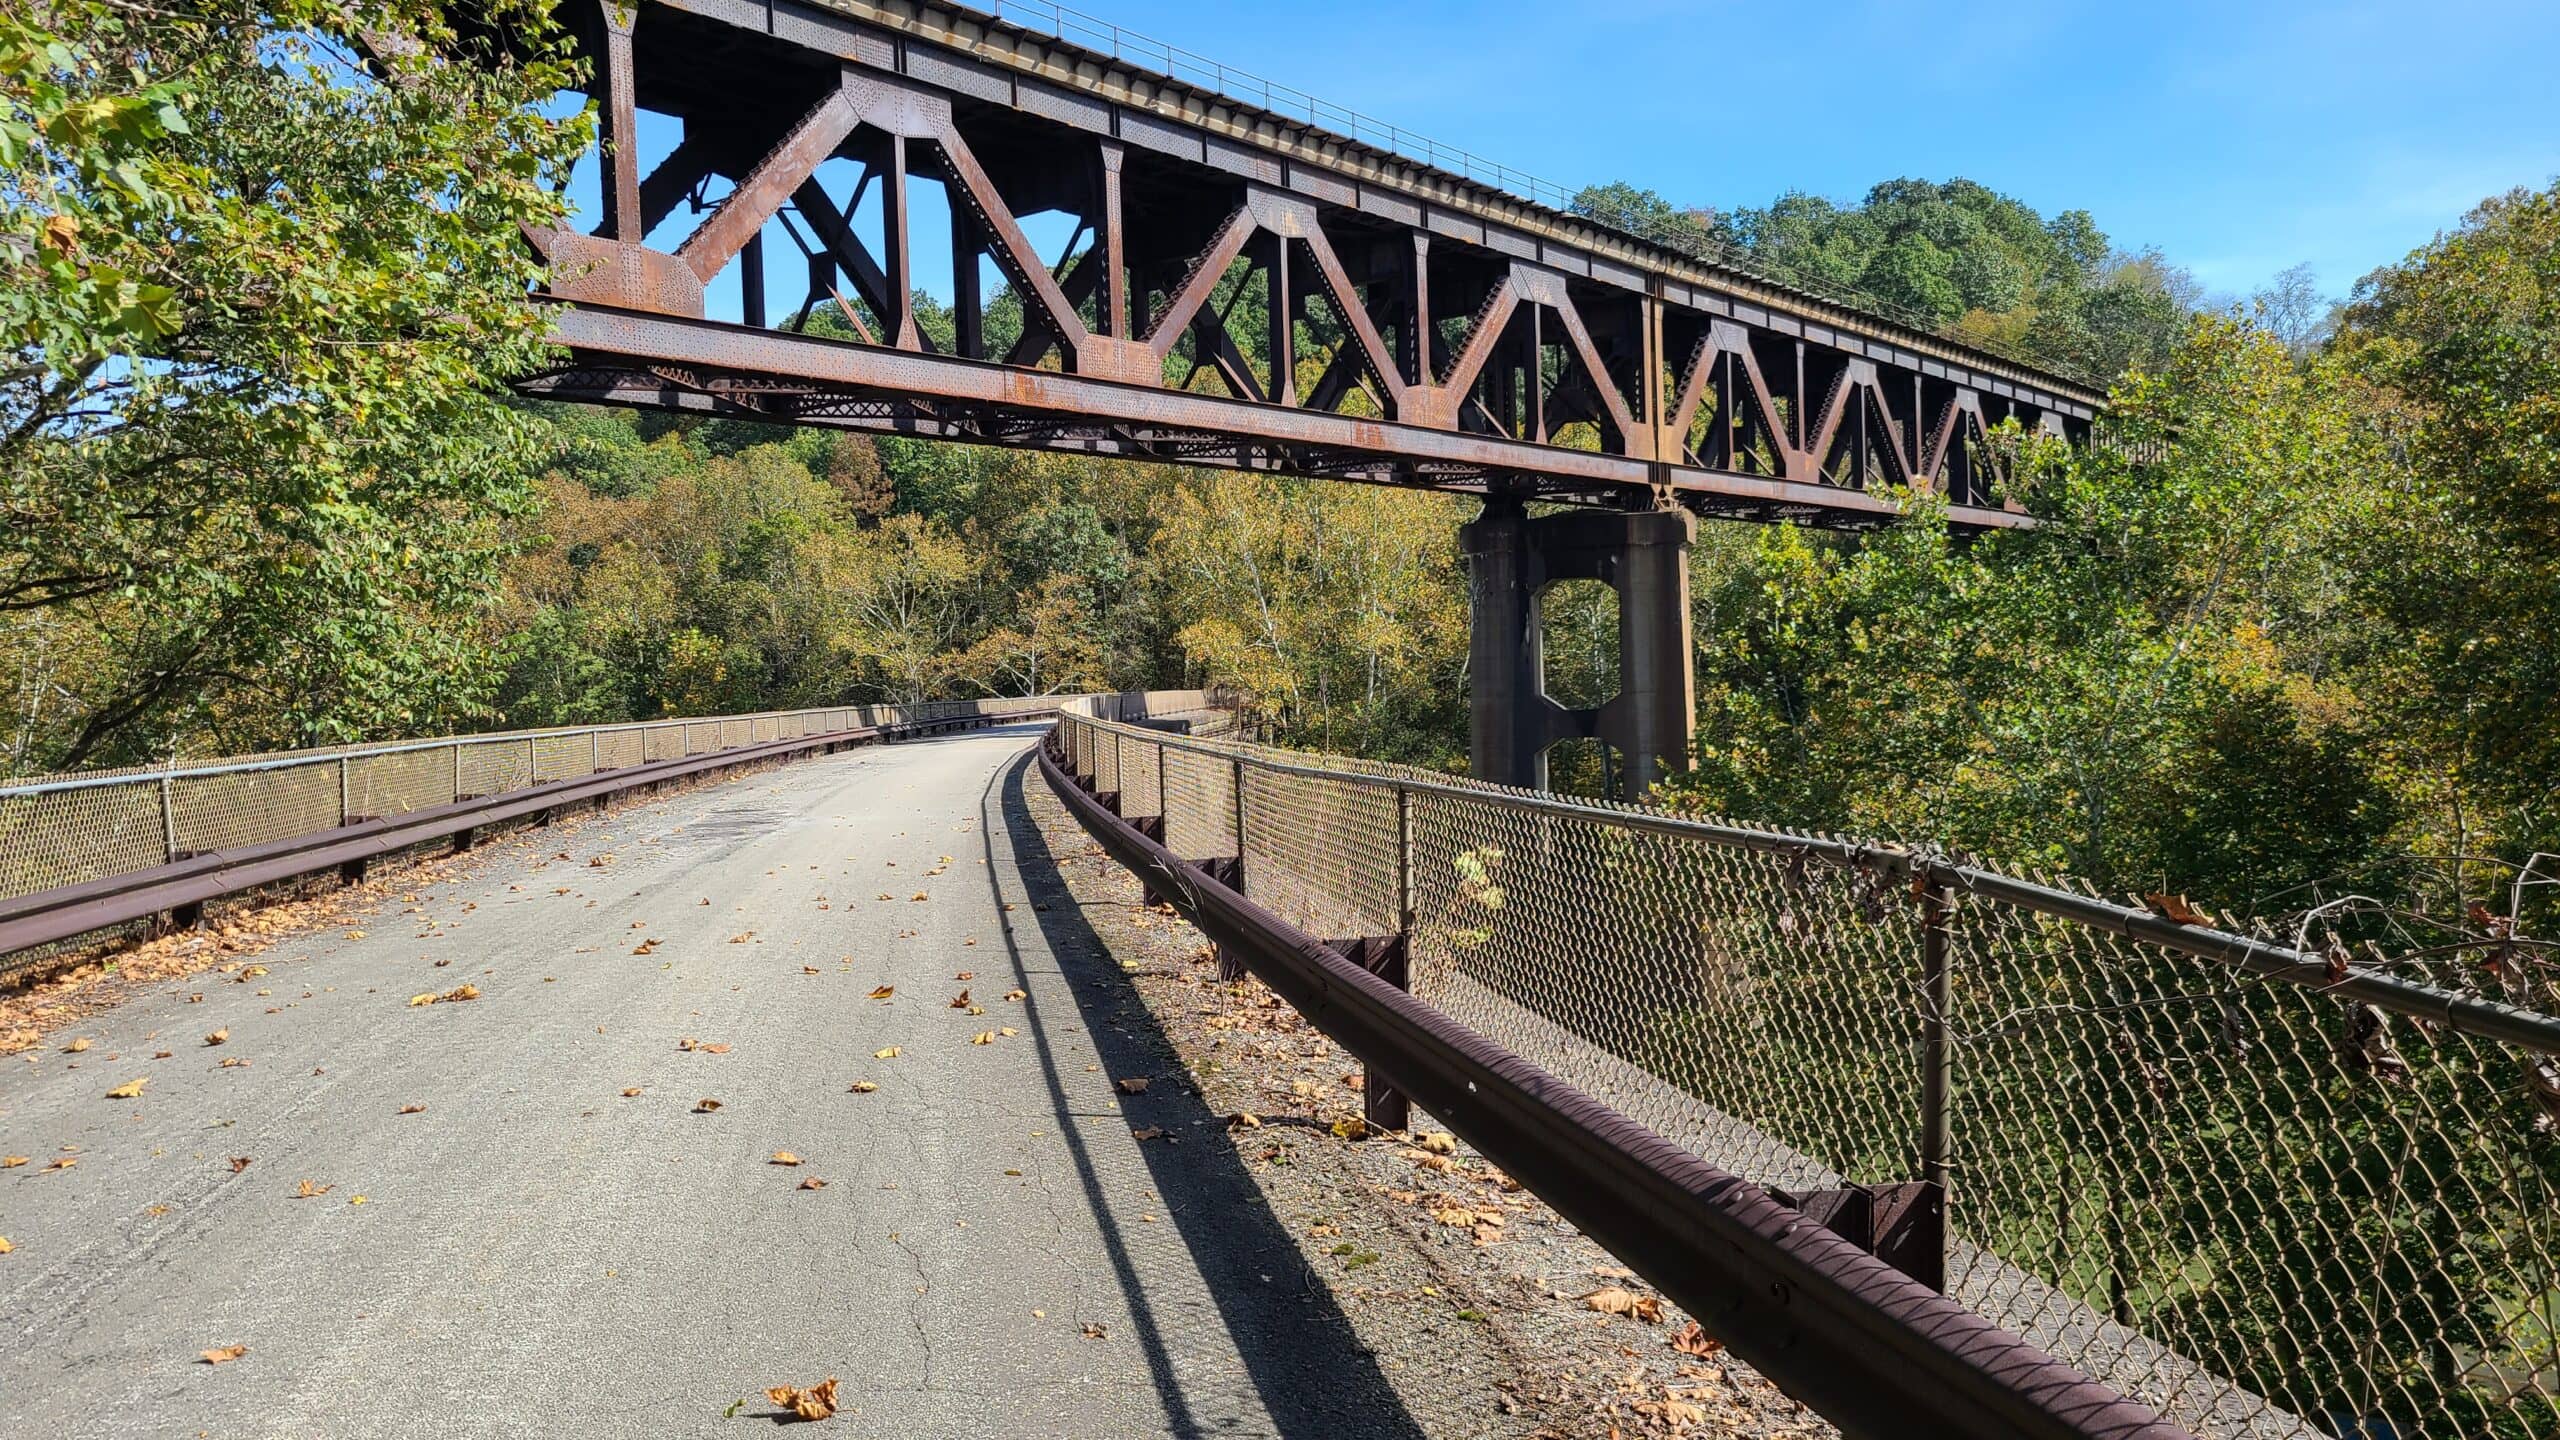 A metal truss railroad bridge runs above a stone railroad bridge.